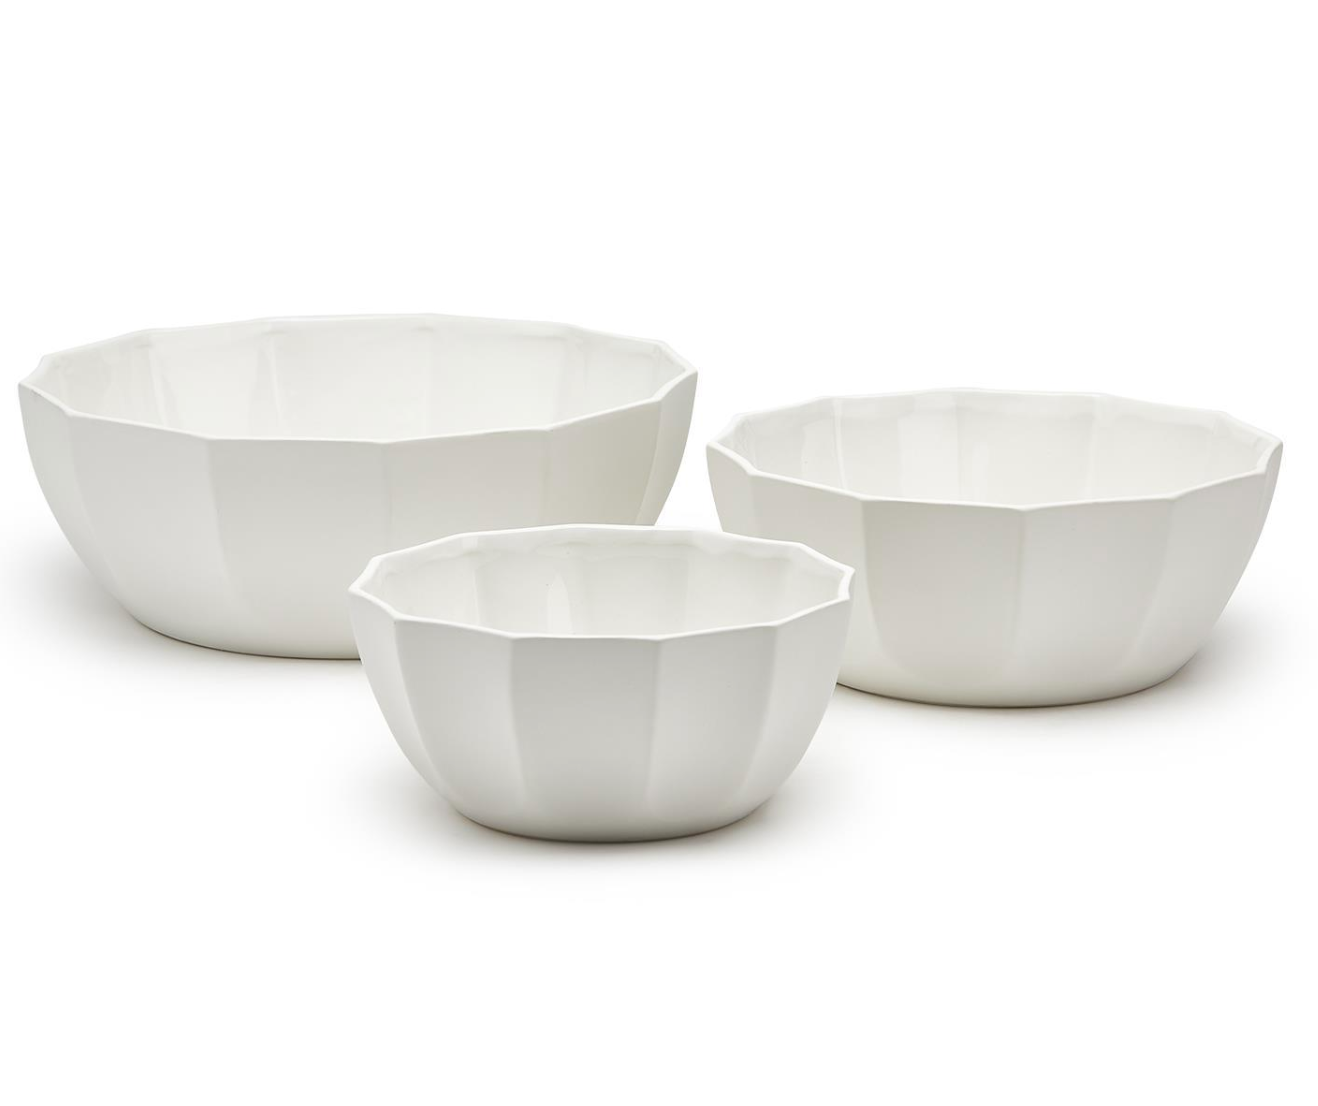 Octagonal Ceramic Bowls